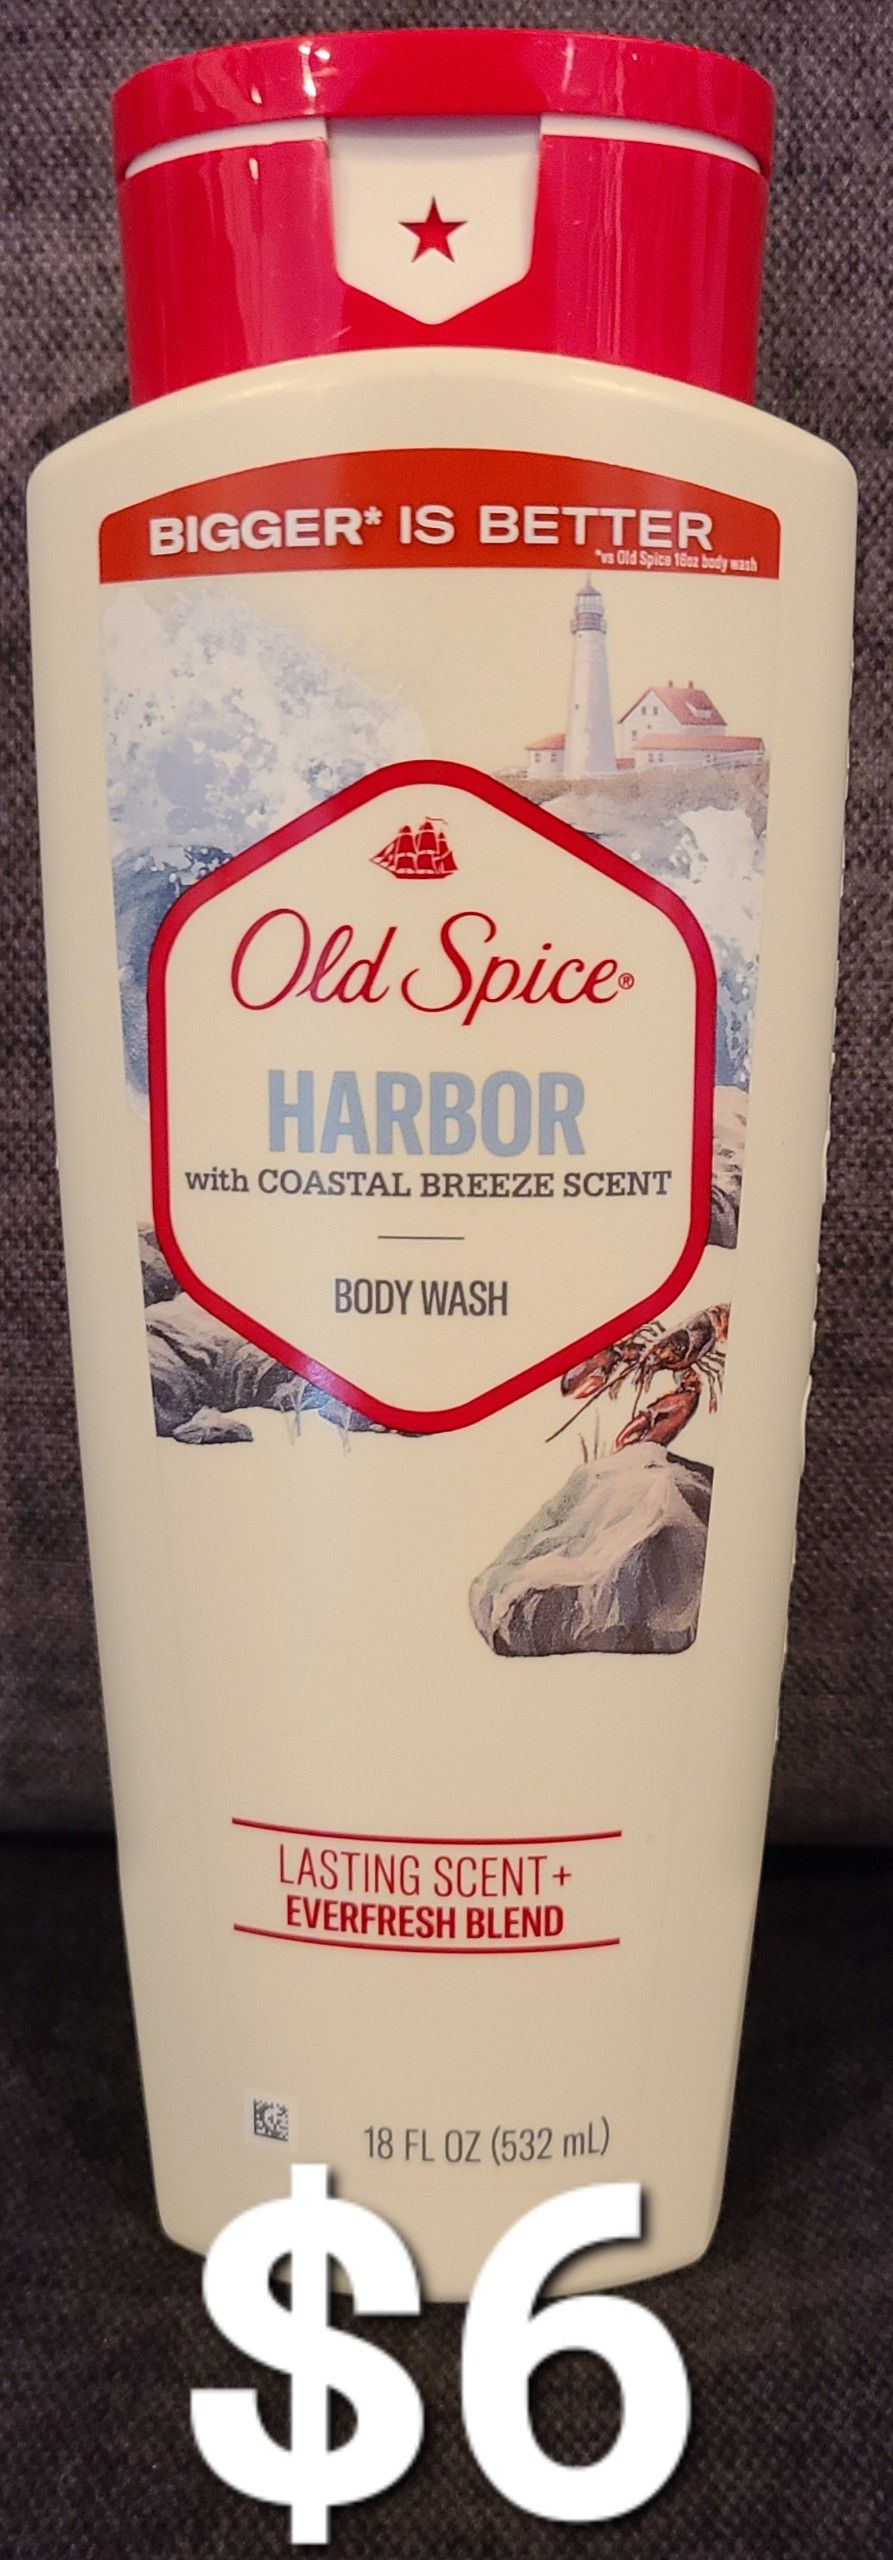 Old Spice Harbor Body Wash